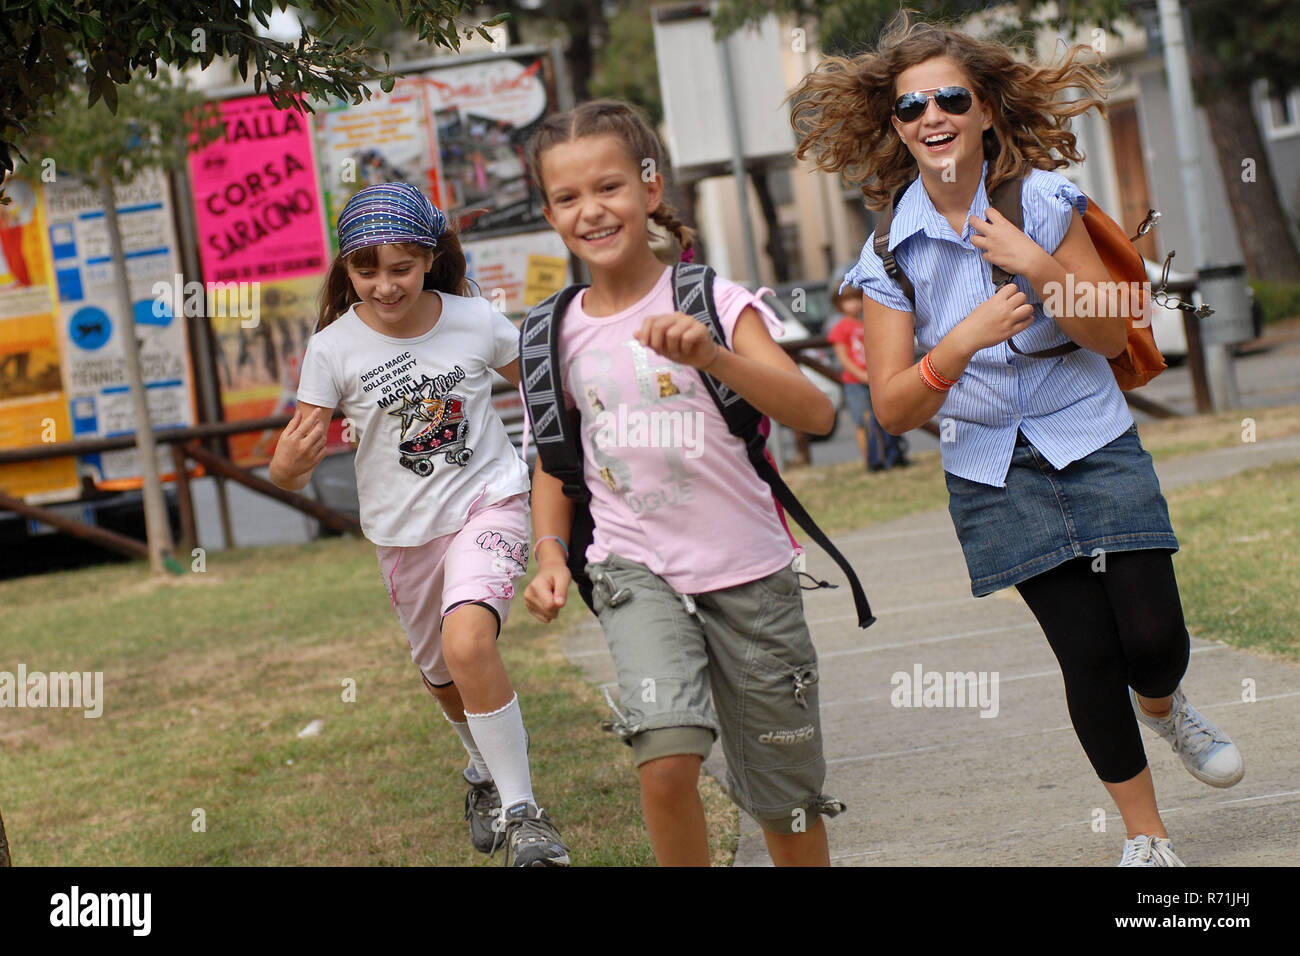 Group of schoolchilds running     Photo © Daiano Cristini/Sintesi/Alamy Stock Photo Stock Photo